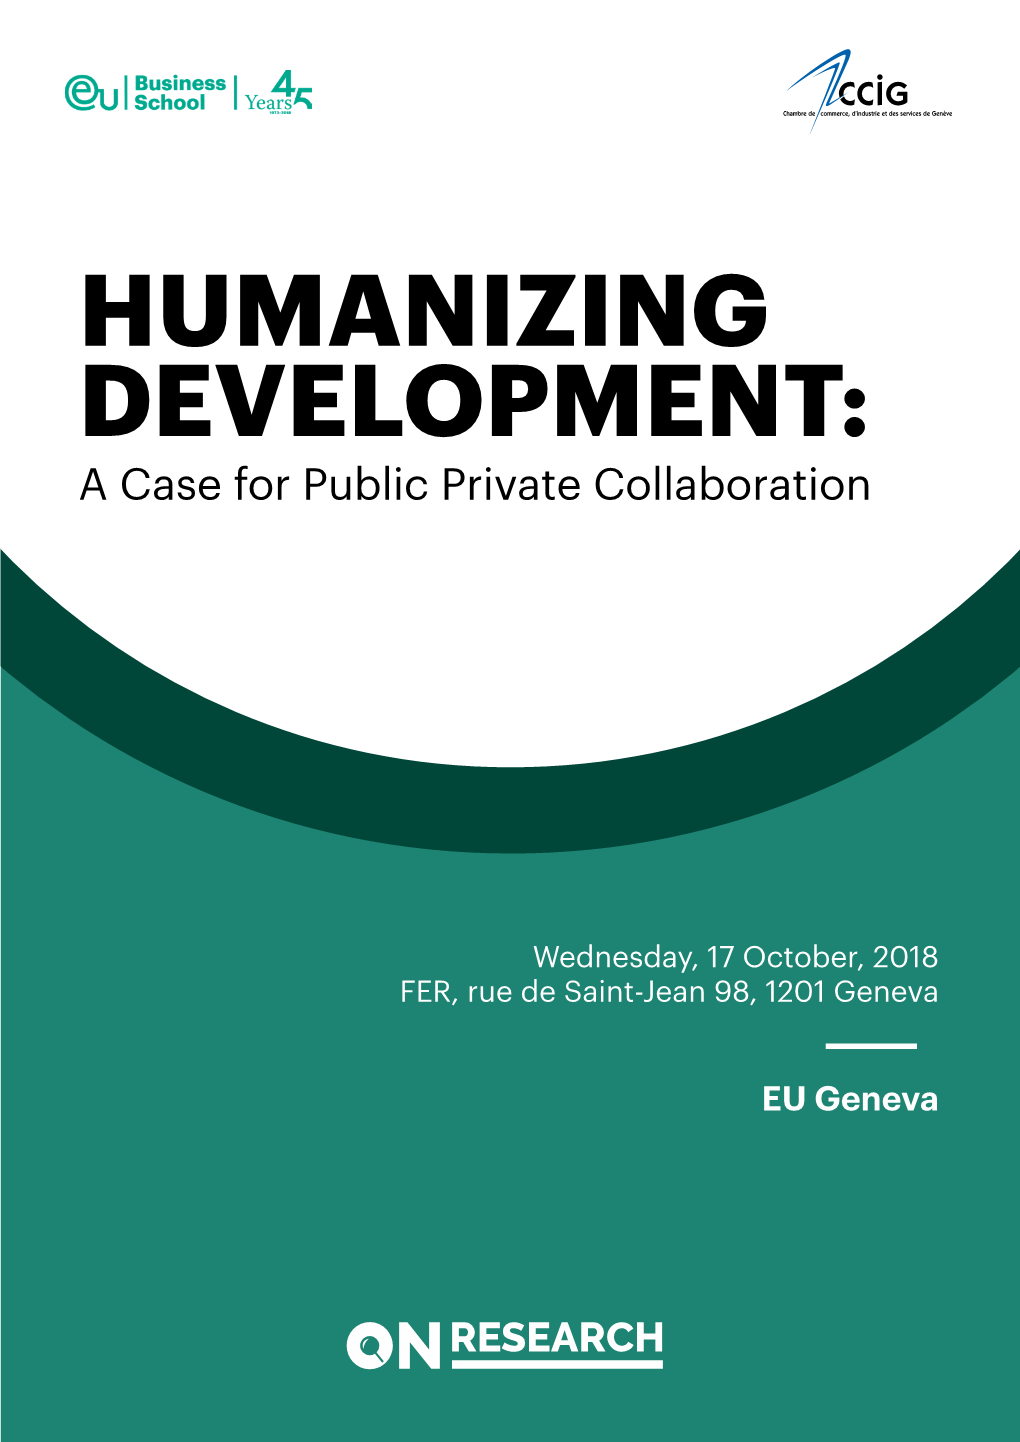 HUMANIZING DEVELOPMENT: a Case for Public Private Collaboration